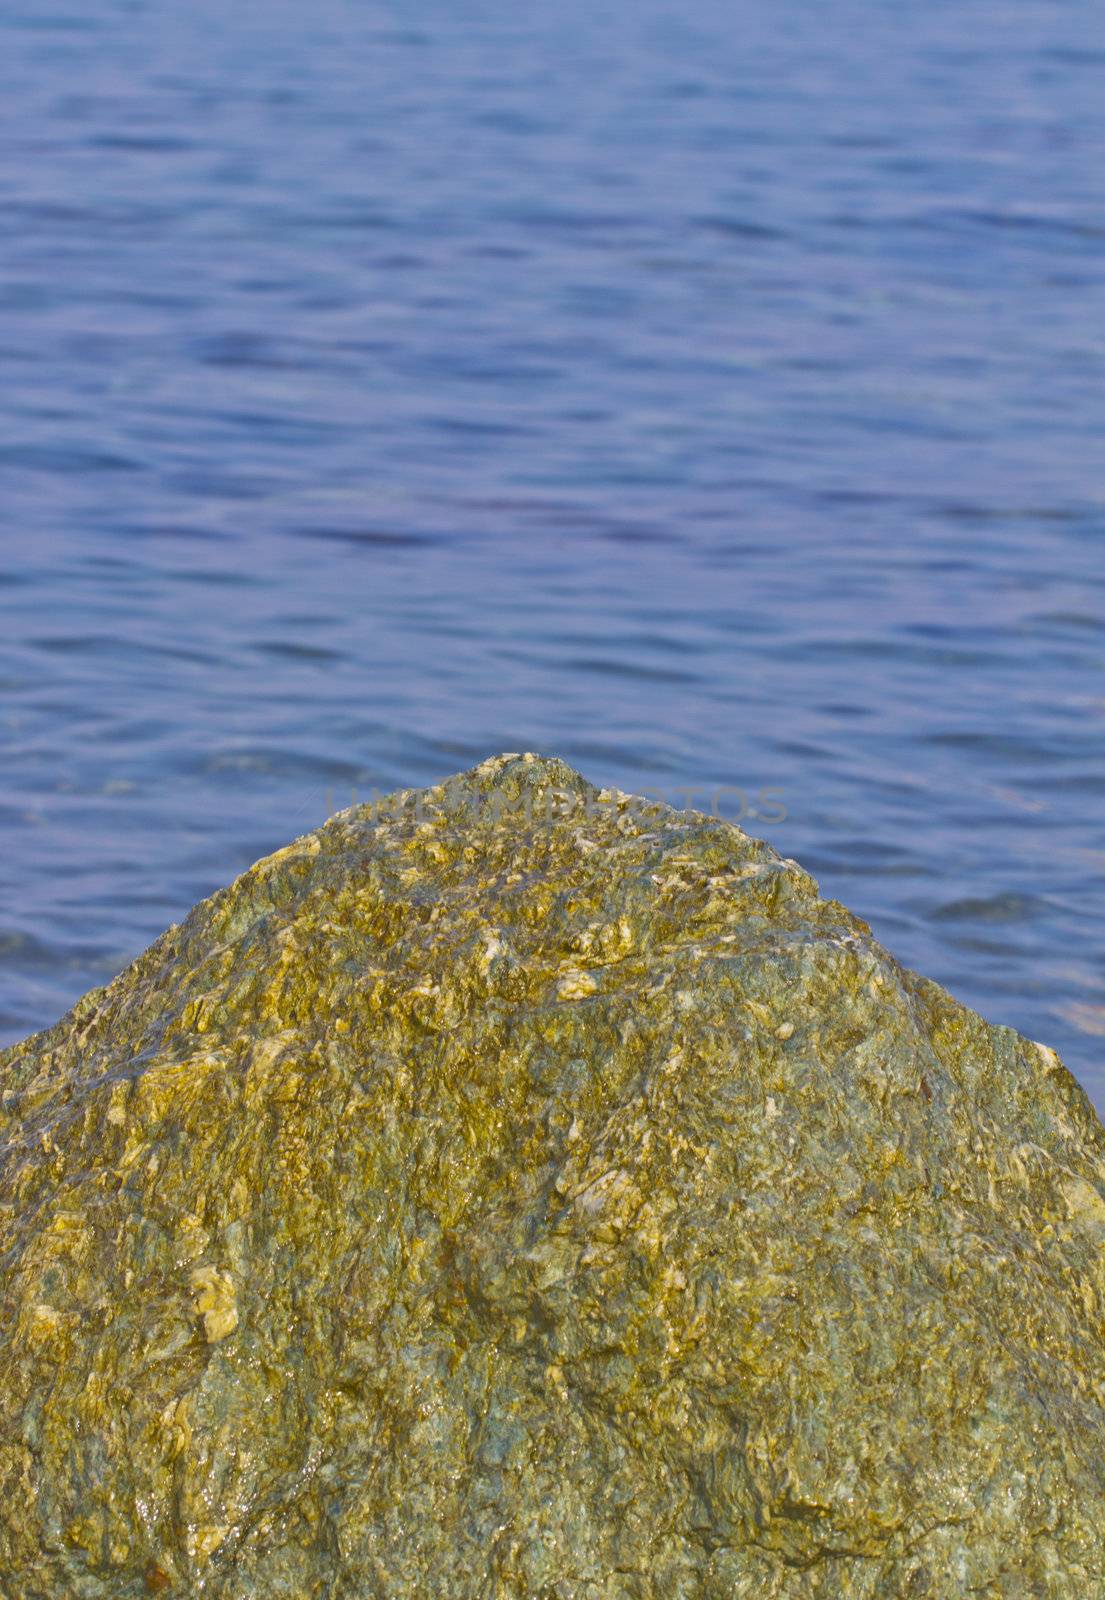 A single big stone over sea background